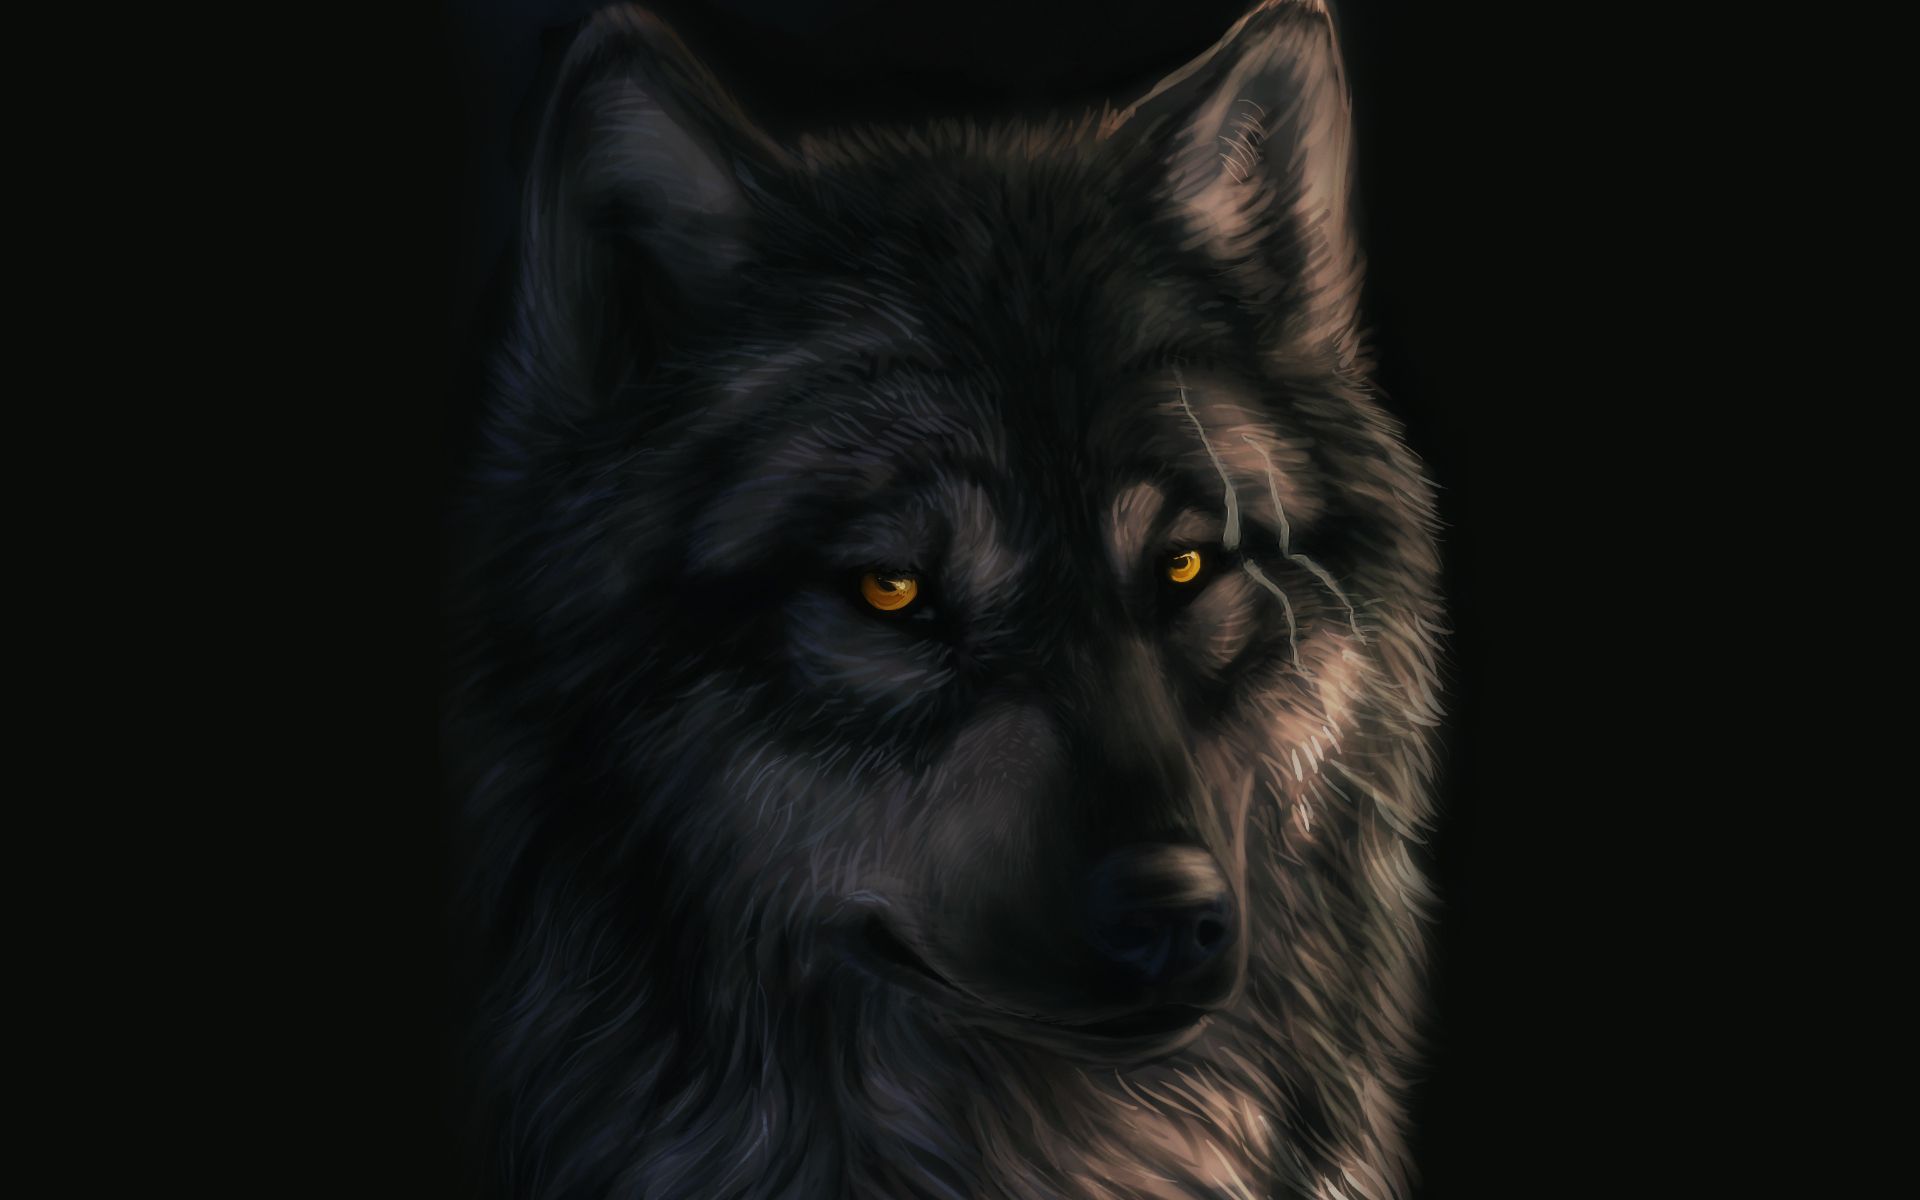 Blackwolf Wallpaper. Blackwolf Wallpaper